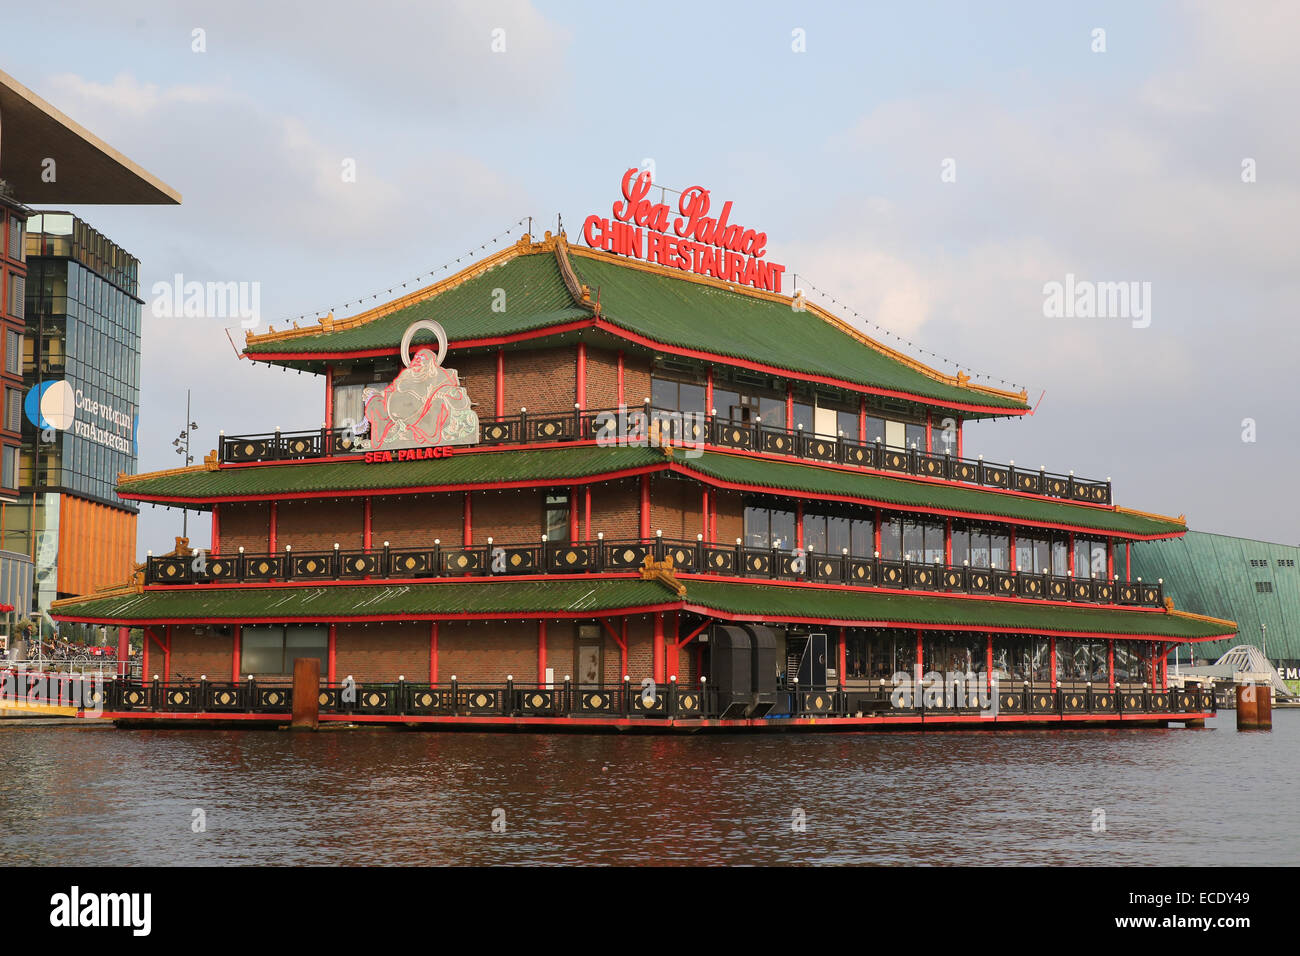 omdraaien onderzeeër Durf sea palace Chinese restaurant in Amsterdam Stock Photo - Alamy